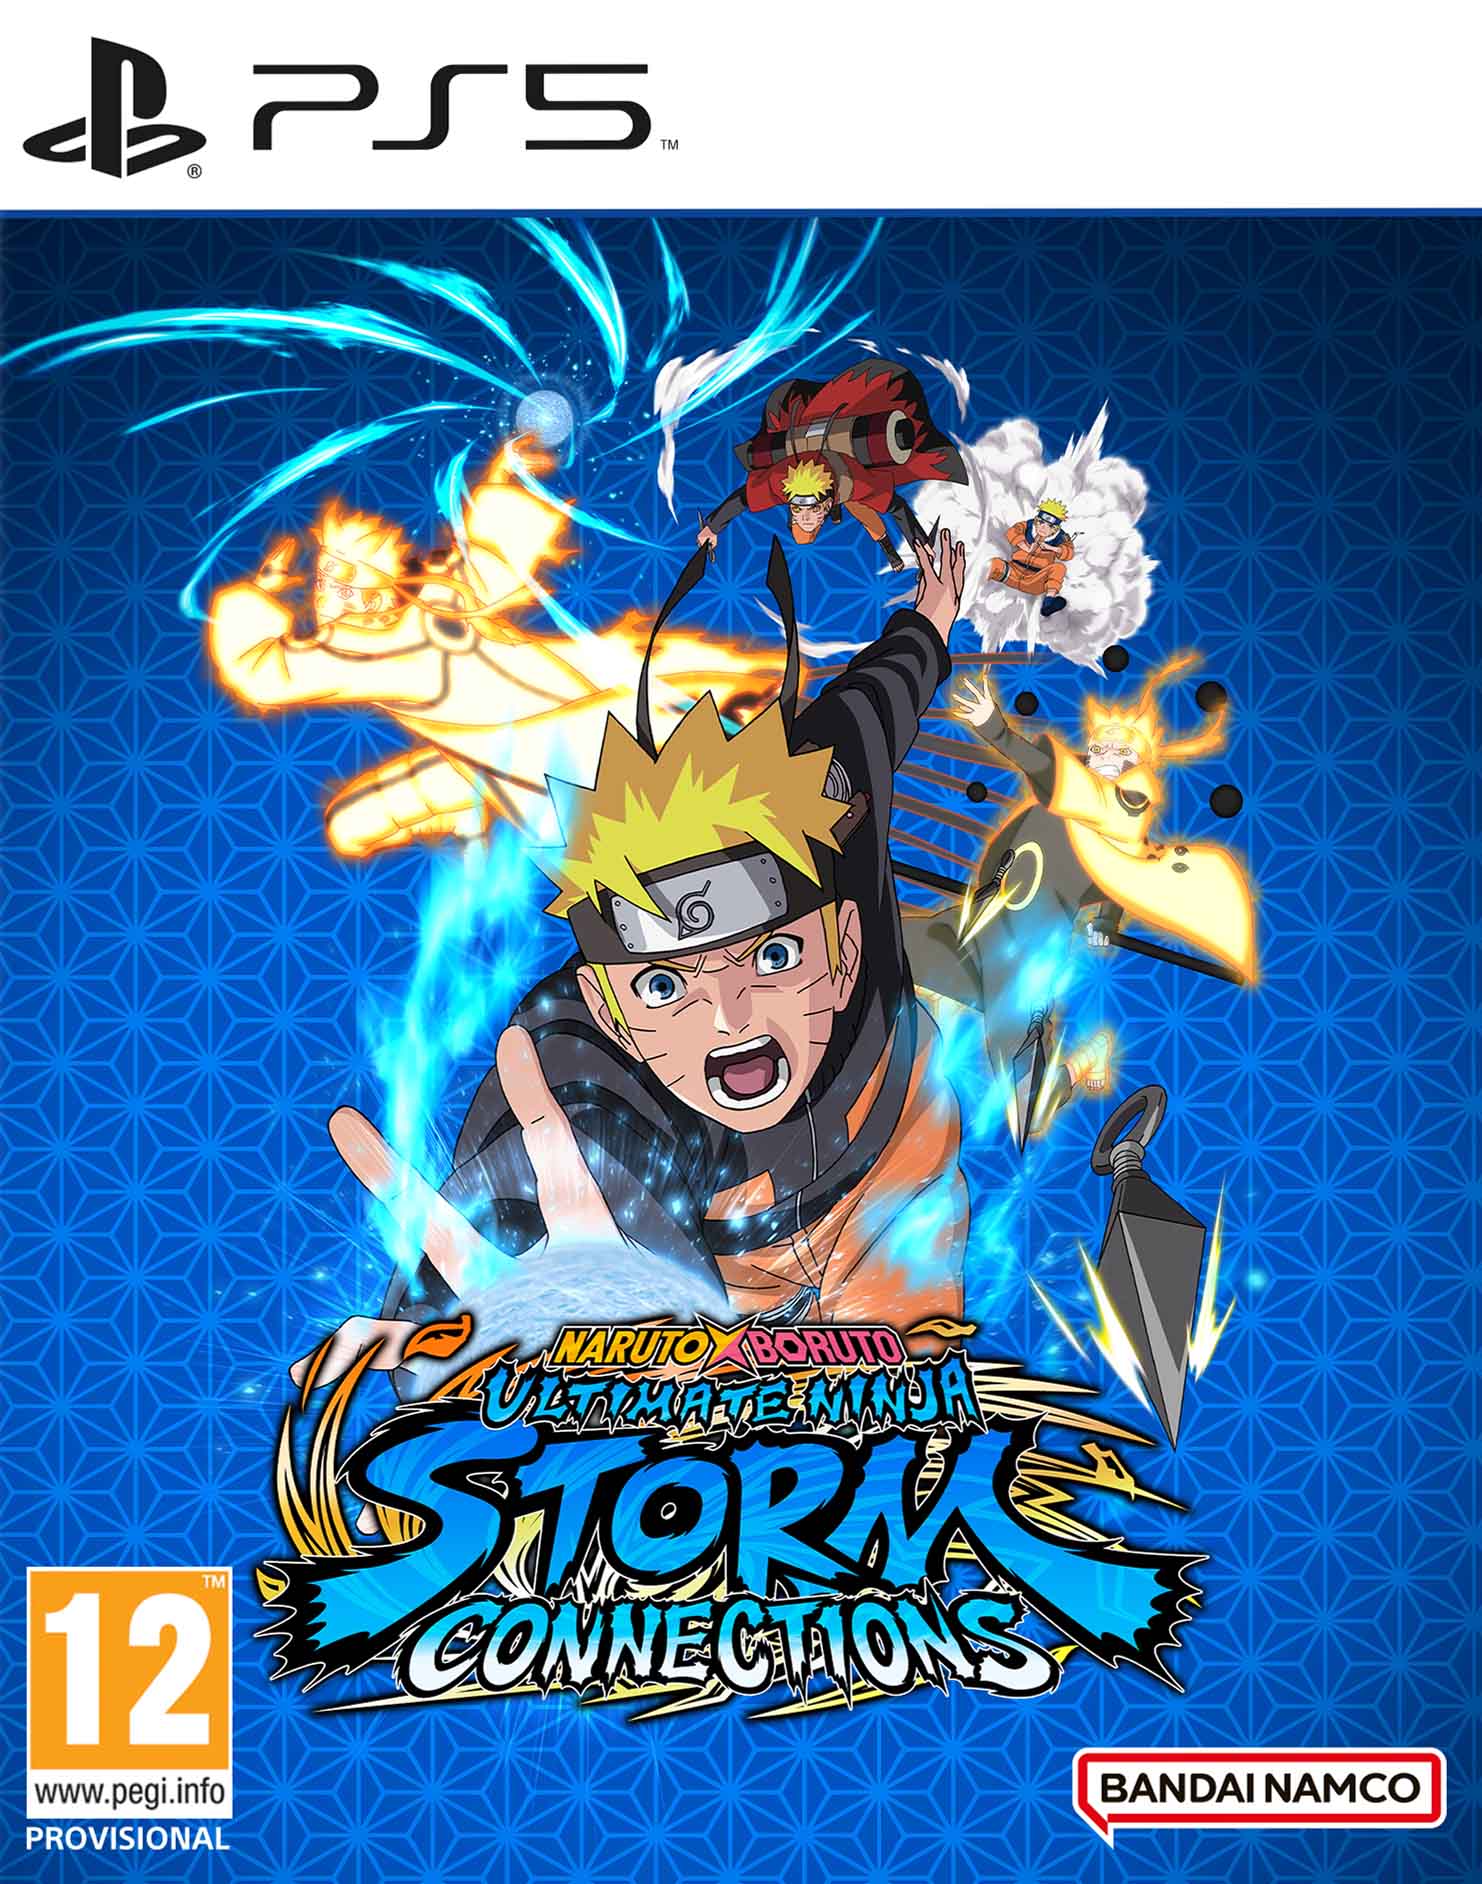 Sony PS3 Playstation 3 Spiel Naruto Ultimate Ninja Storm 1 NEU*NEW